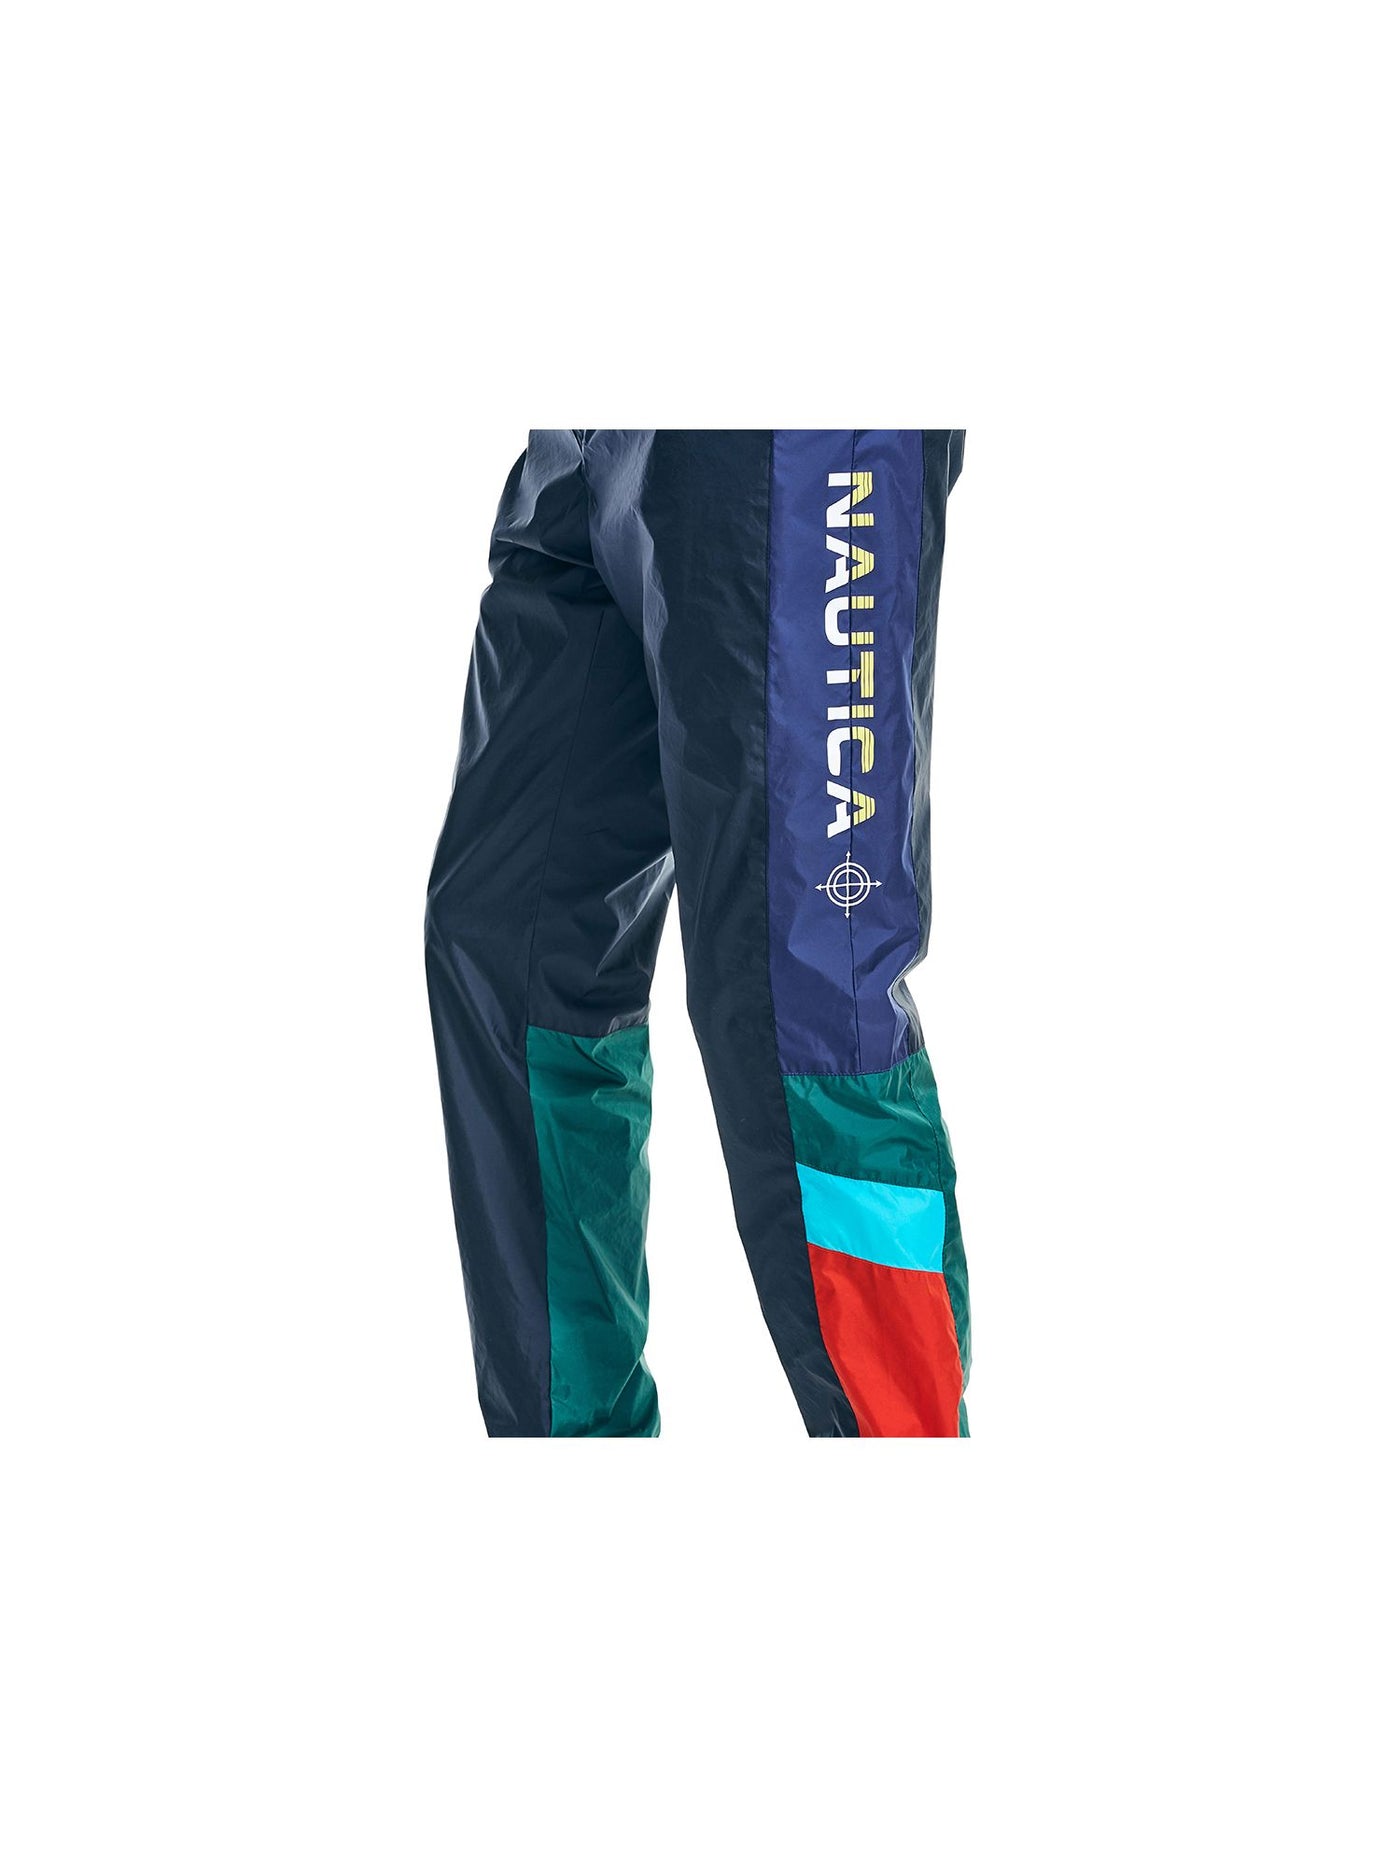 NAUTICA Mens Navy Drawstring, Classic Fit Athletic Pants M